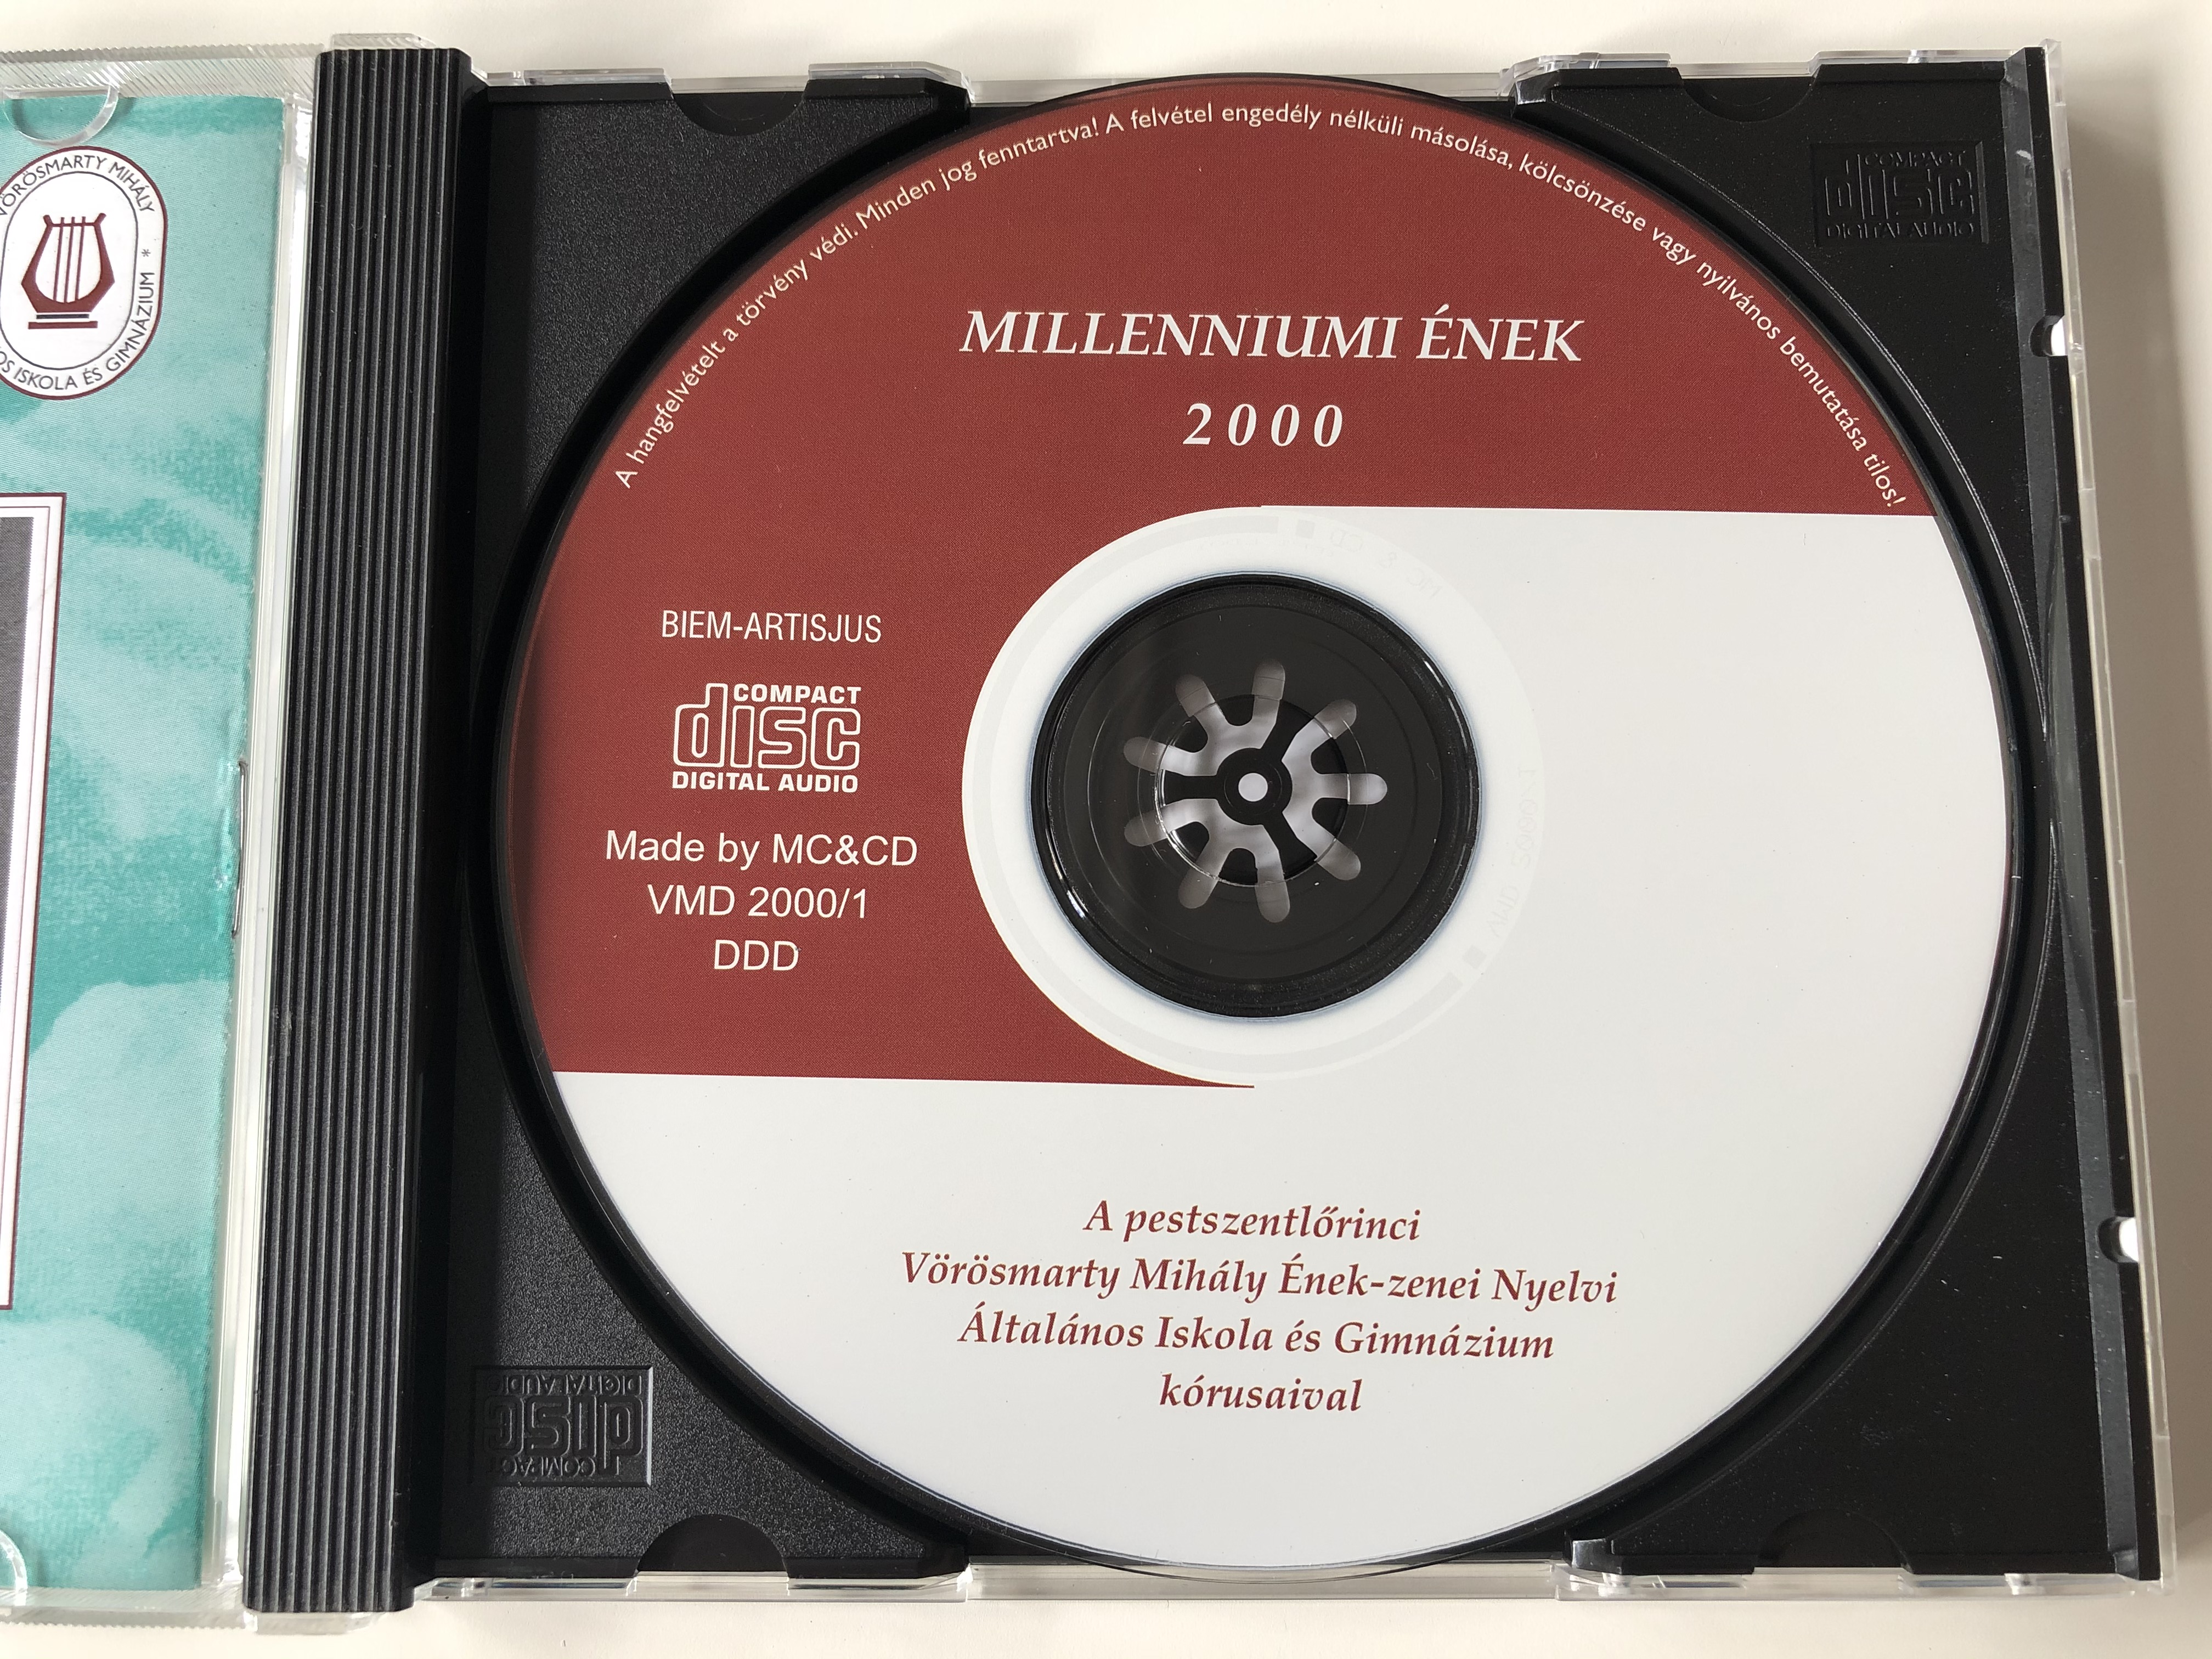 millenniumi-enek-2000-a-pestszentlorinci-vorosmarty-iskola-korusaival-vorosmarty-mihaly-audio-cd-2000-vmd-20001-6-.jpg